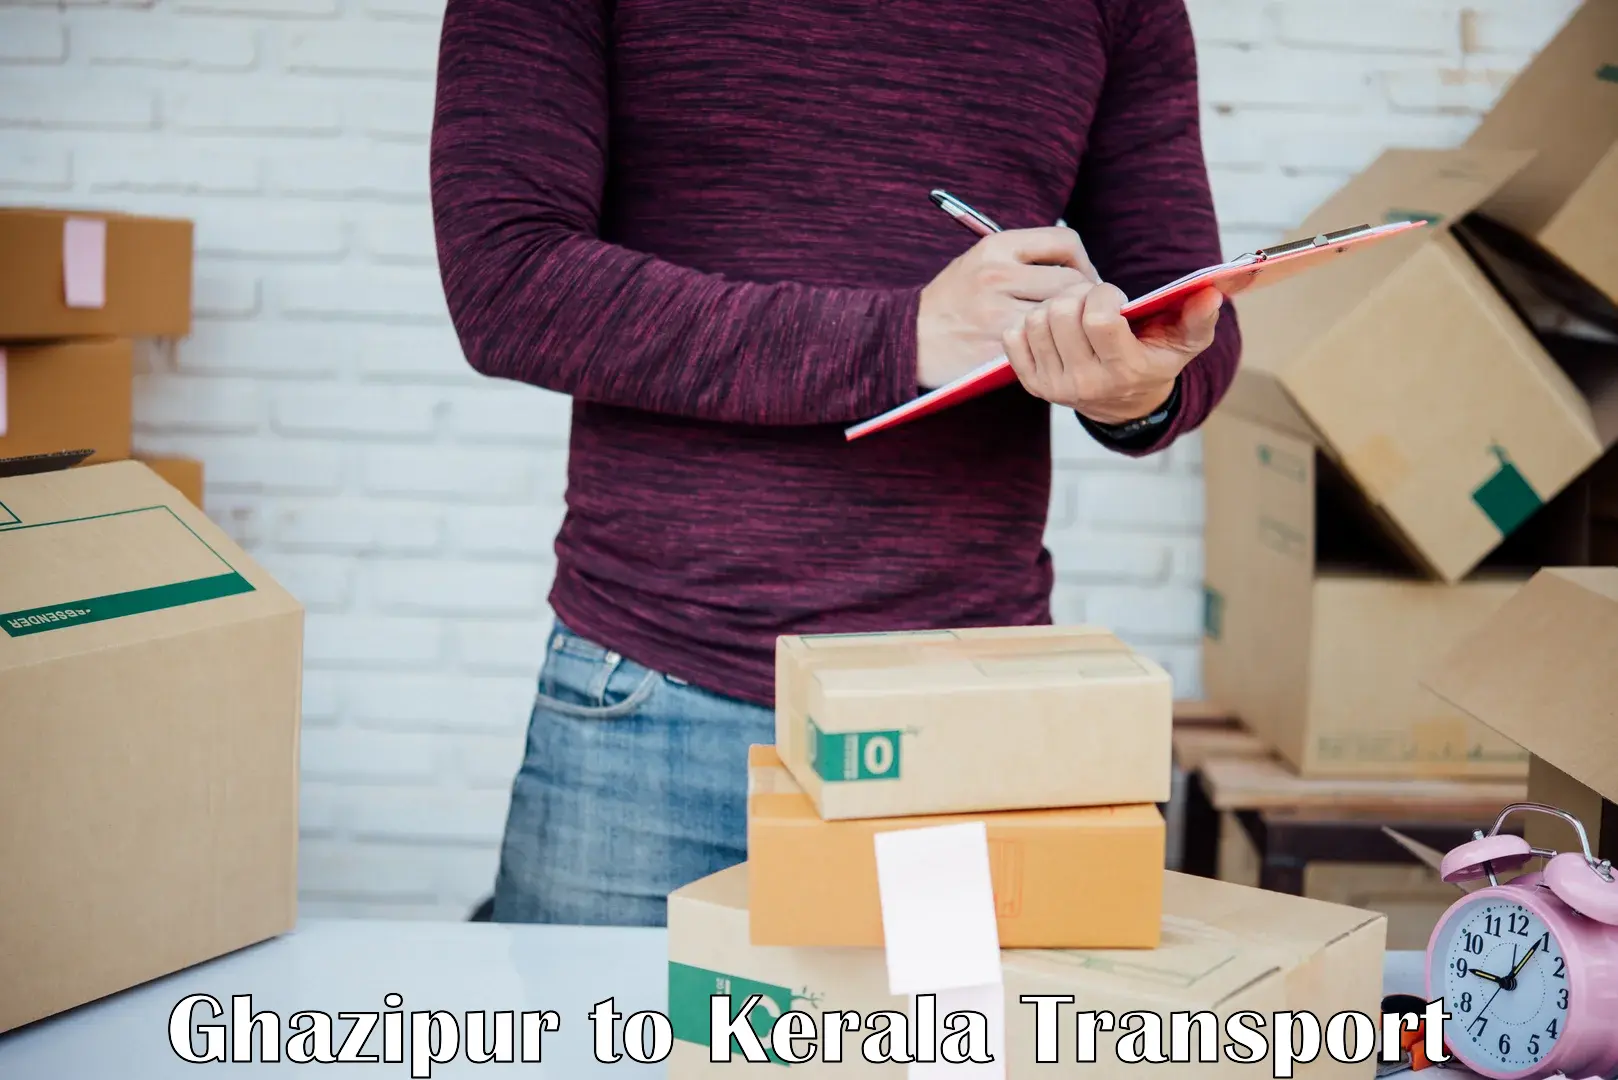 Furniture transport service Ghazipur to Kerala